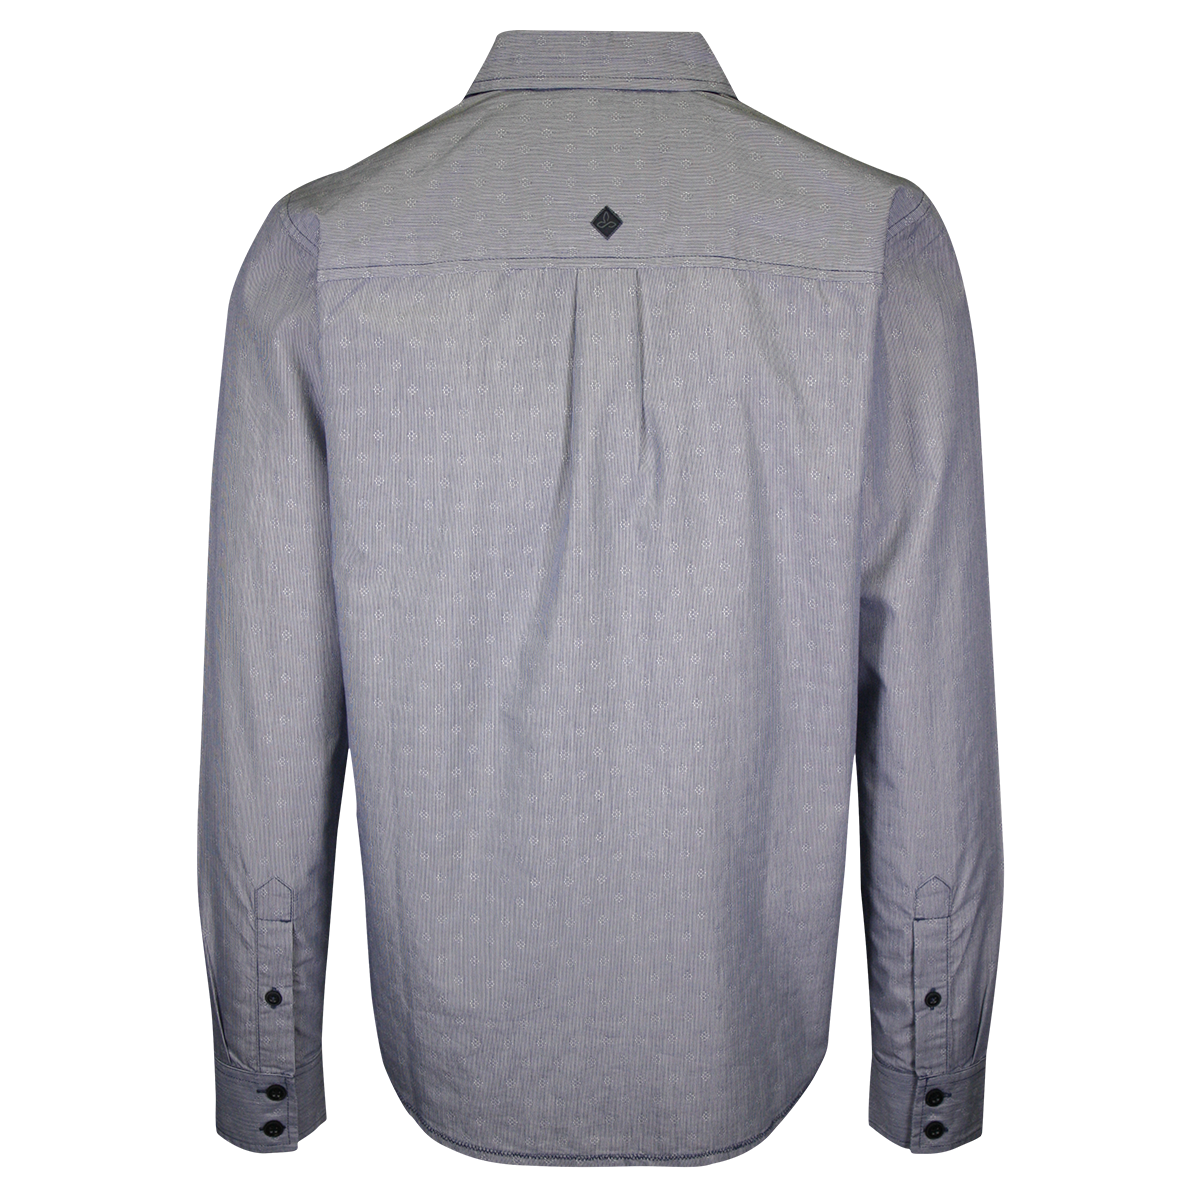 prAna Men's Diamond Pattern Striped L/S Woven Shirt (S59)